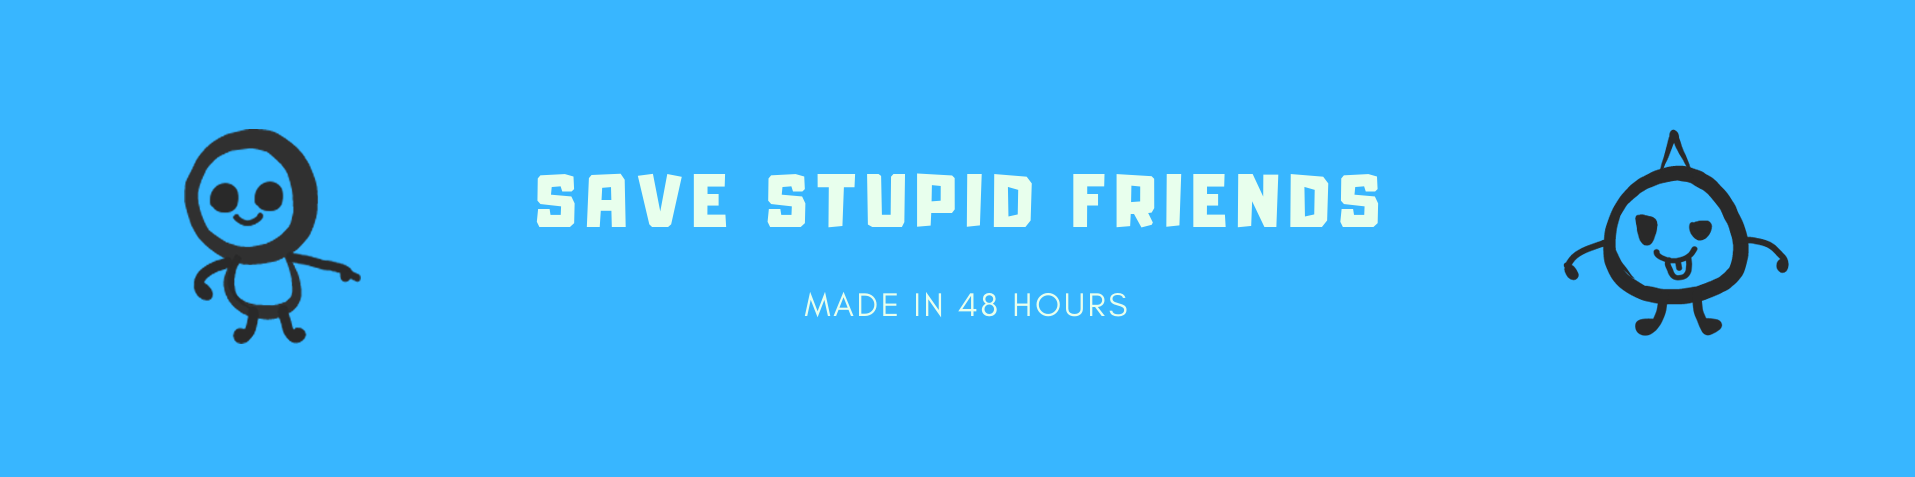 Save Stupid Friends